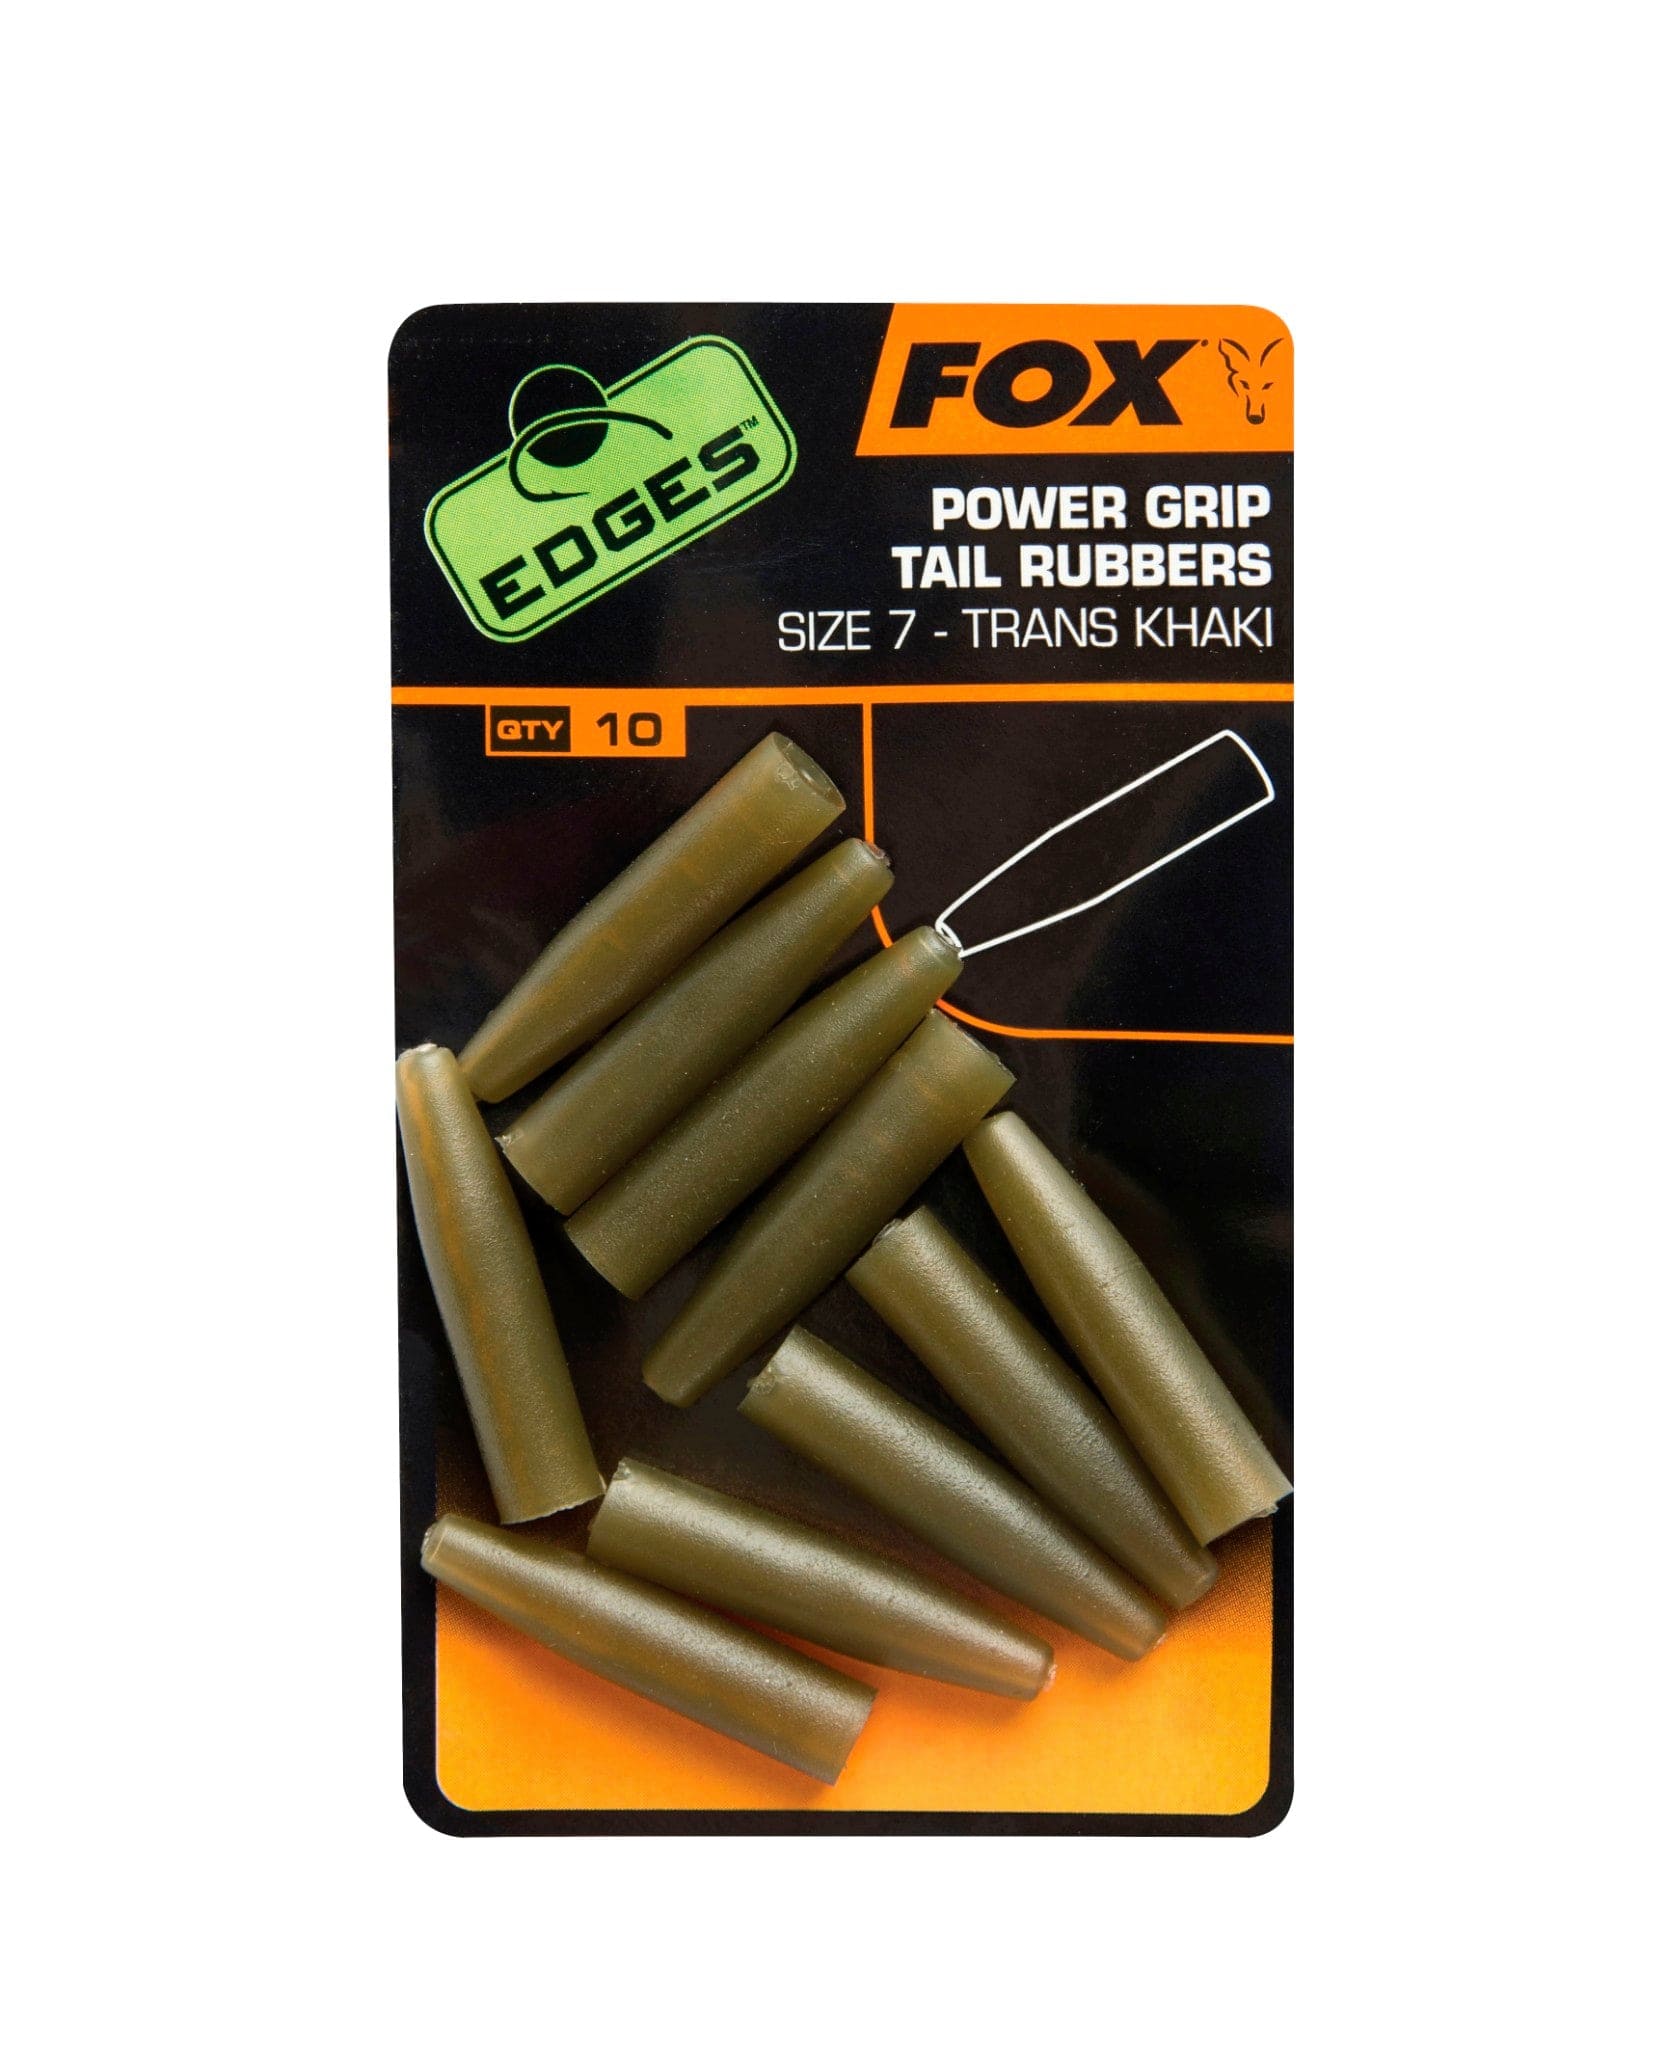 FOX Edges Power Grip tail rubbers size 7 x 10pcs.